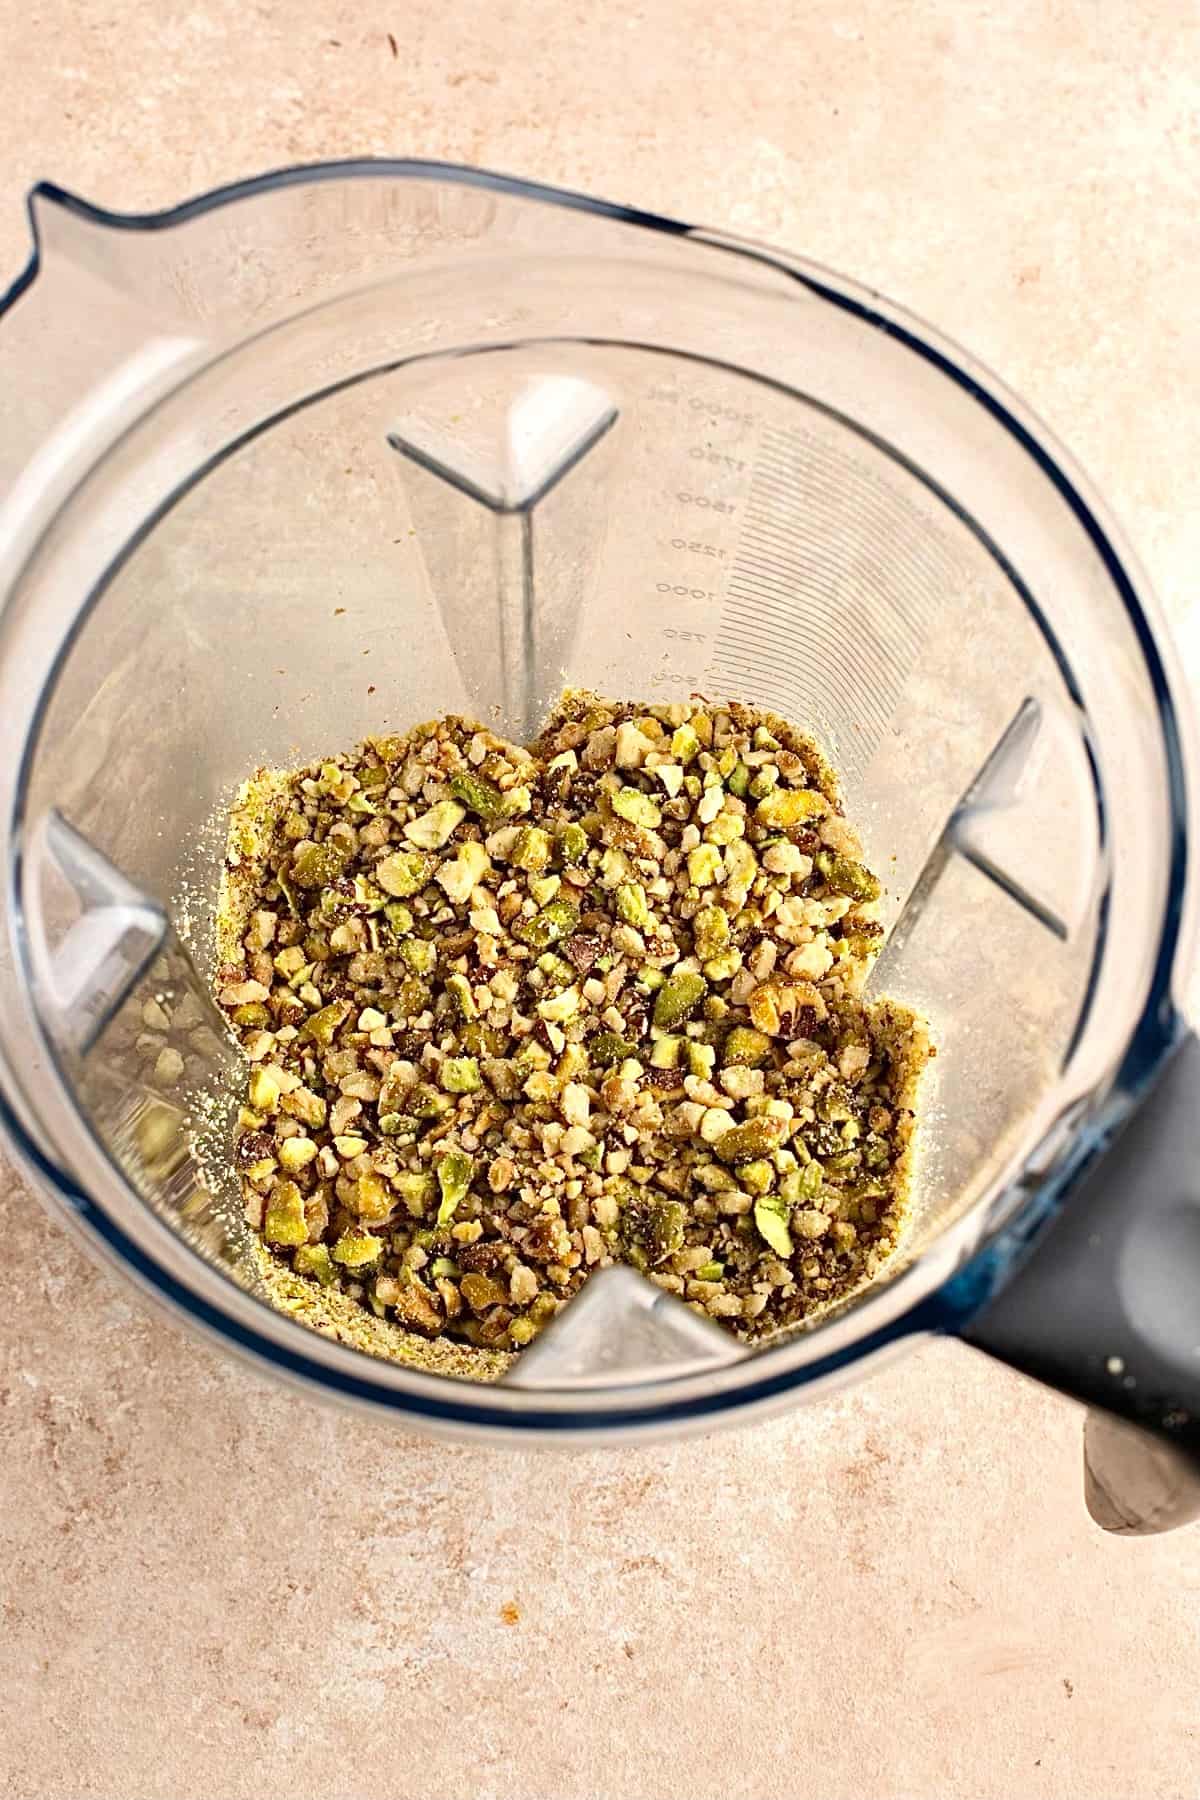 Prepare the nuts for Chocolate Baklava